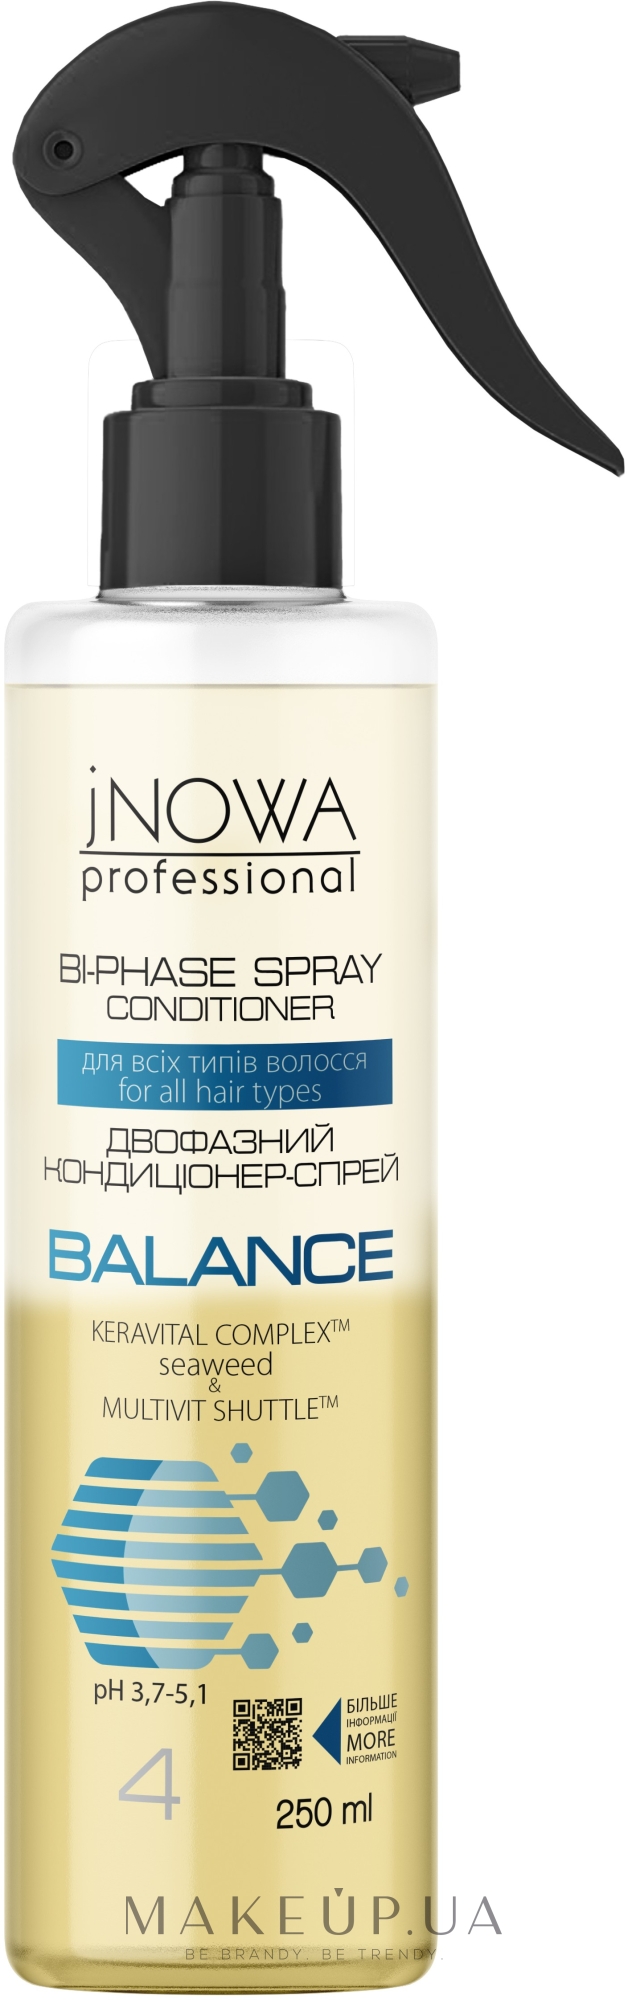 Двухфазный спрей-кондиционер для волос - JNOWA Professional 4 Balance Bi-Phase Spray Conditioner — фото 250ml